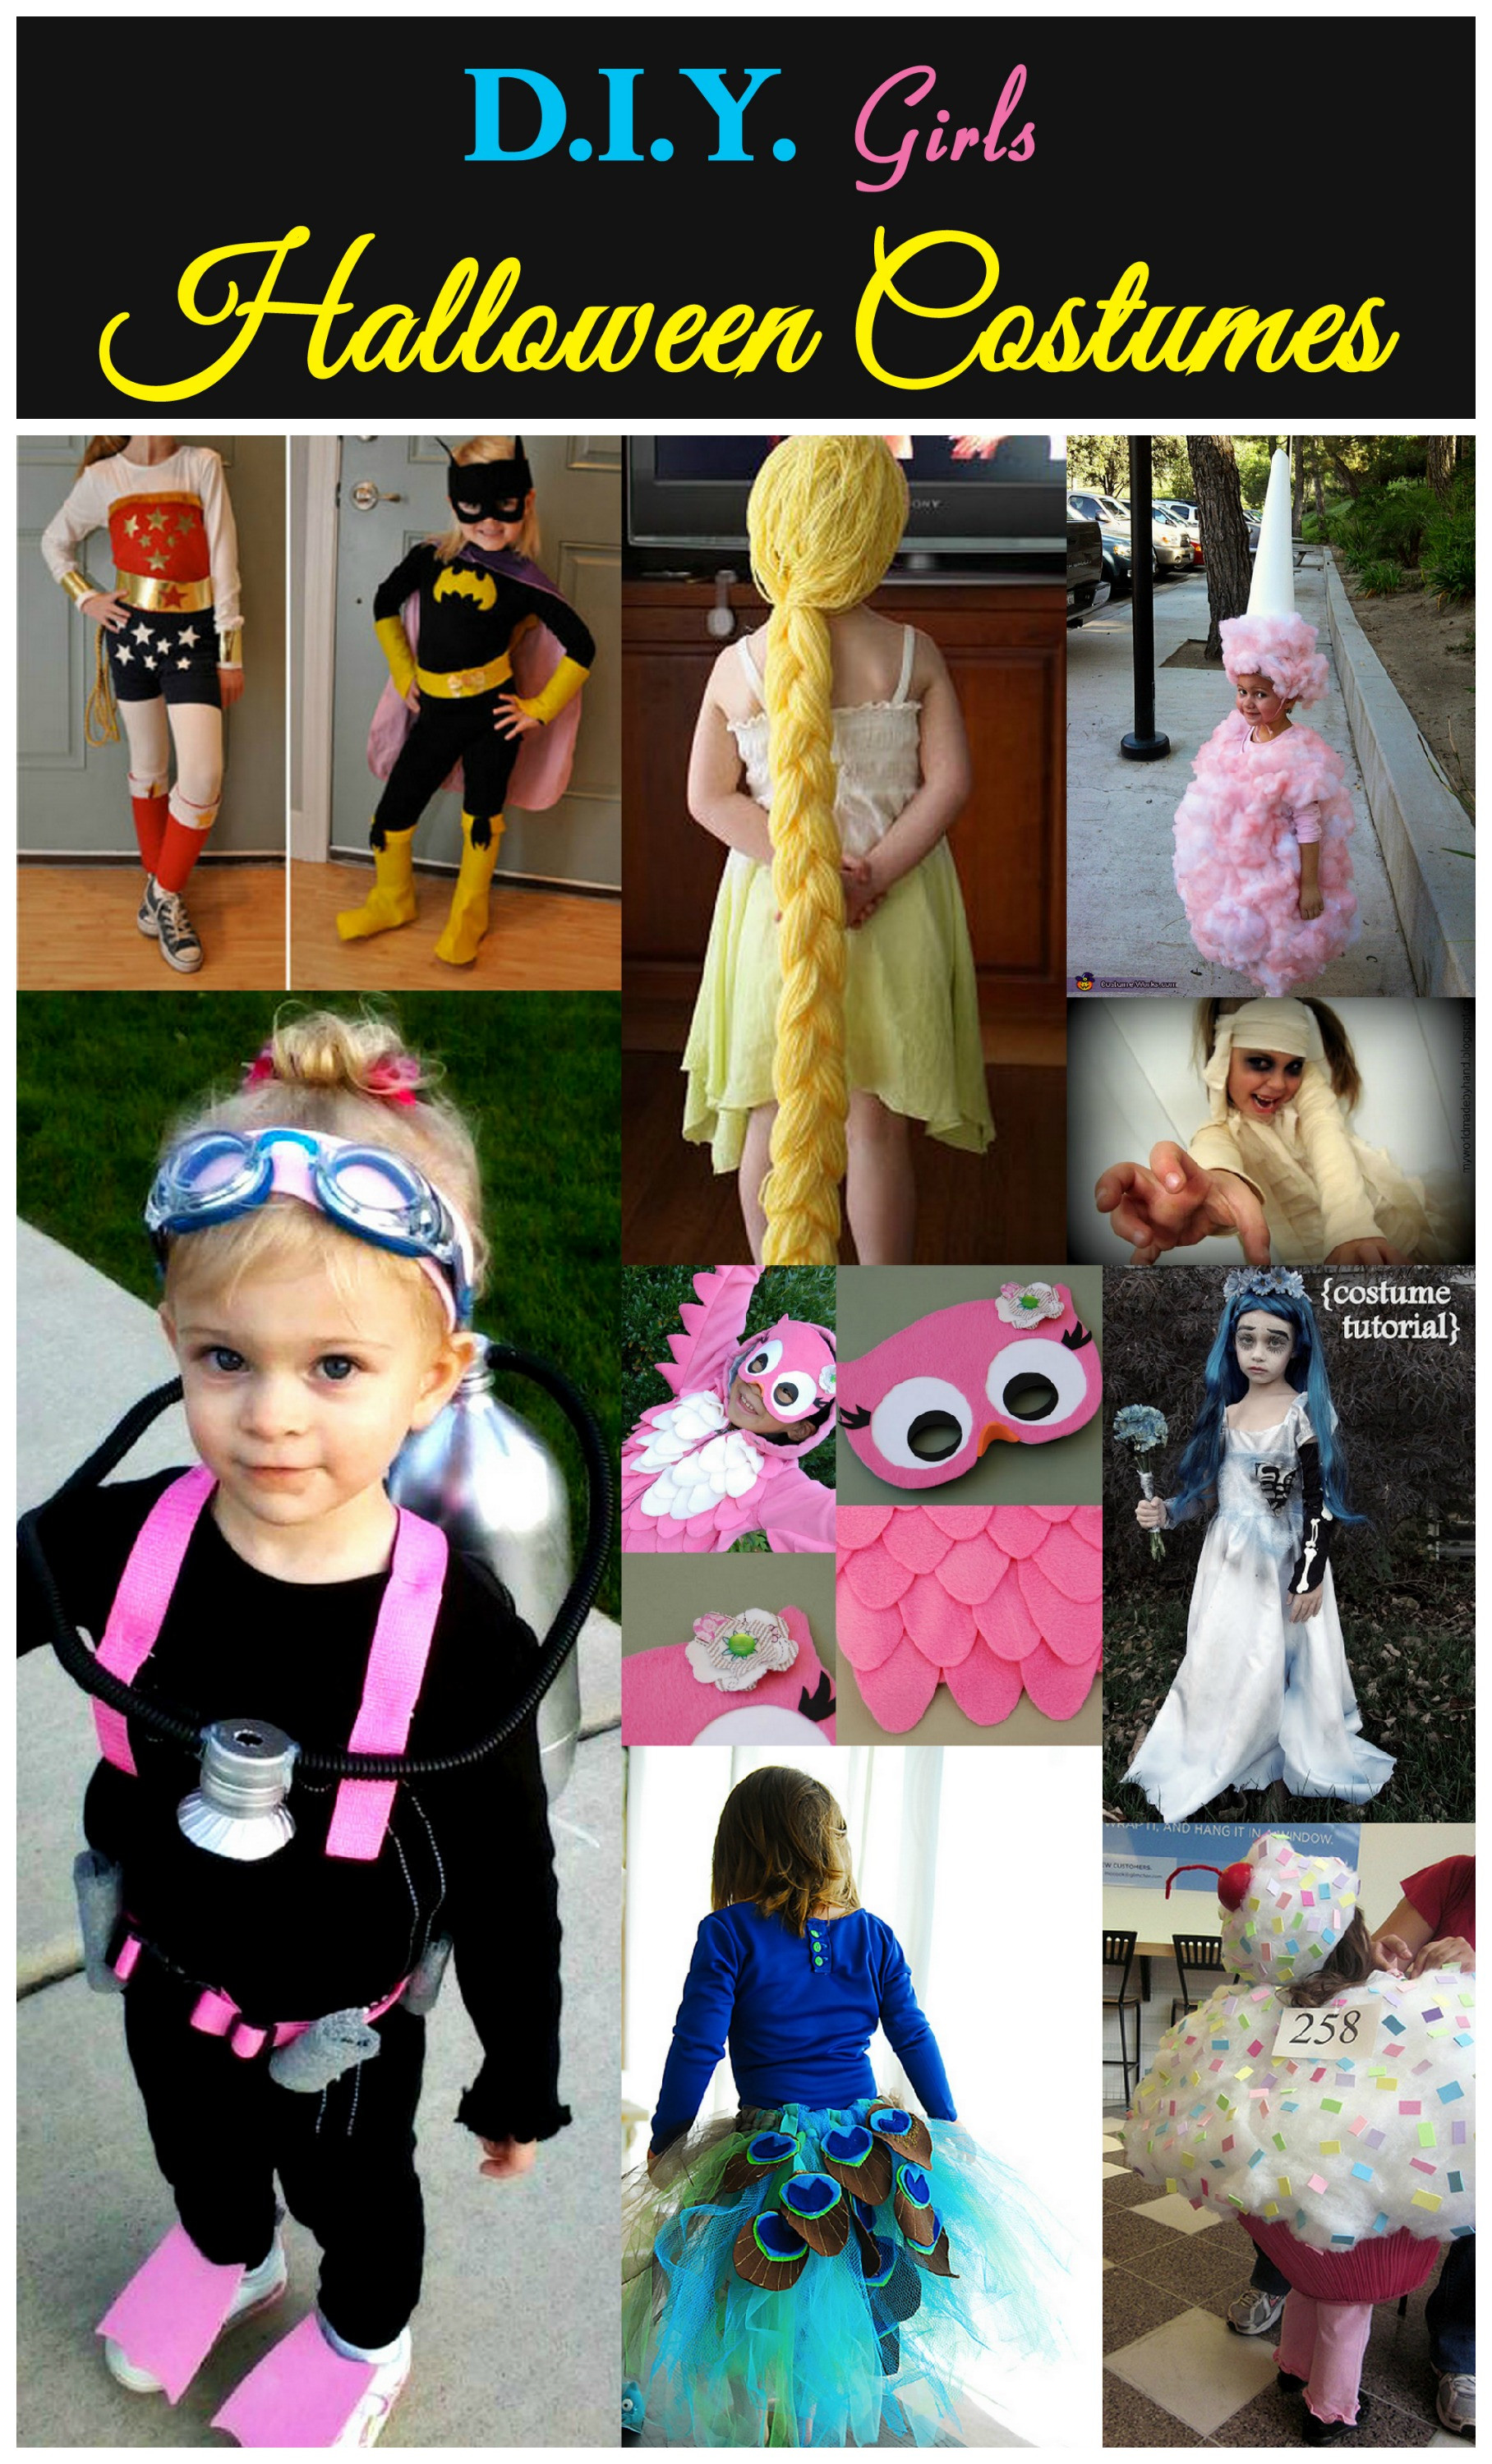 Best ideas about DIY Halloween Costume Girls
. Save or Pin D I Y Girls Halloween Costumes Now.